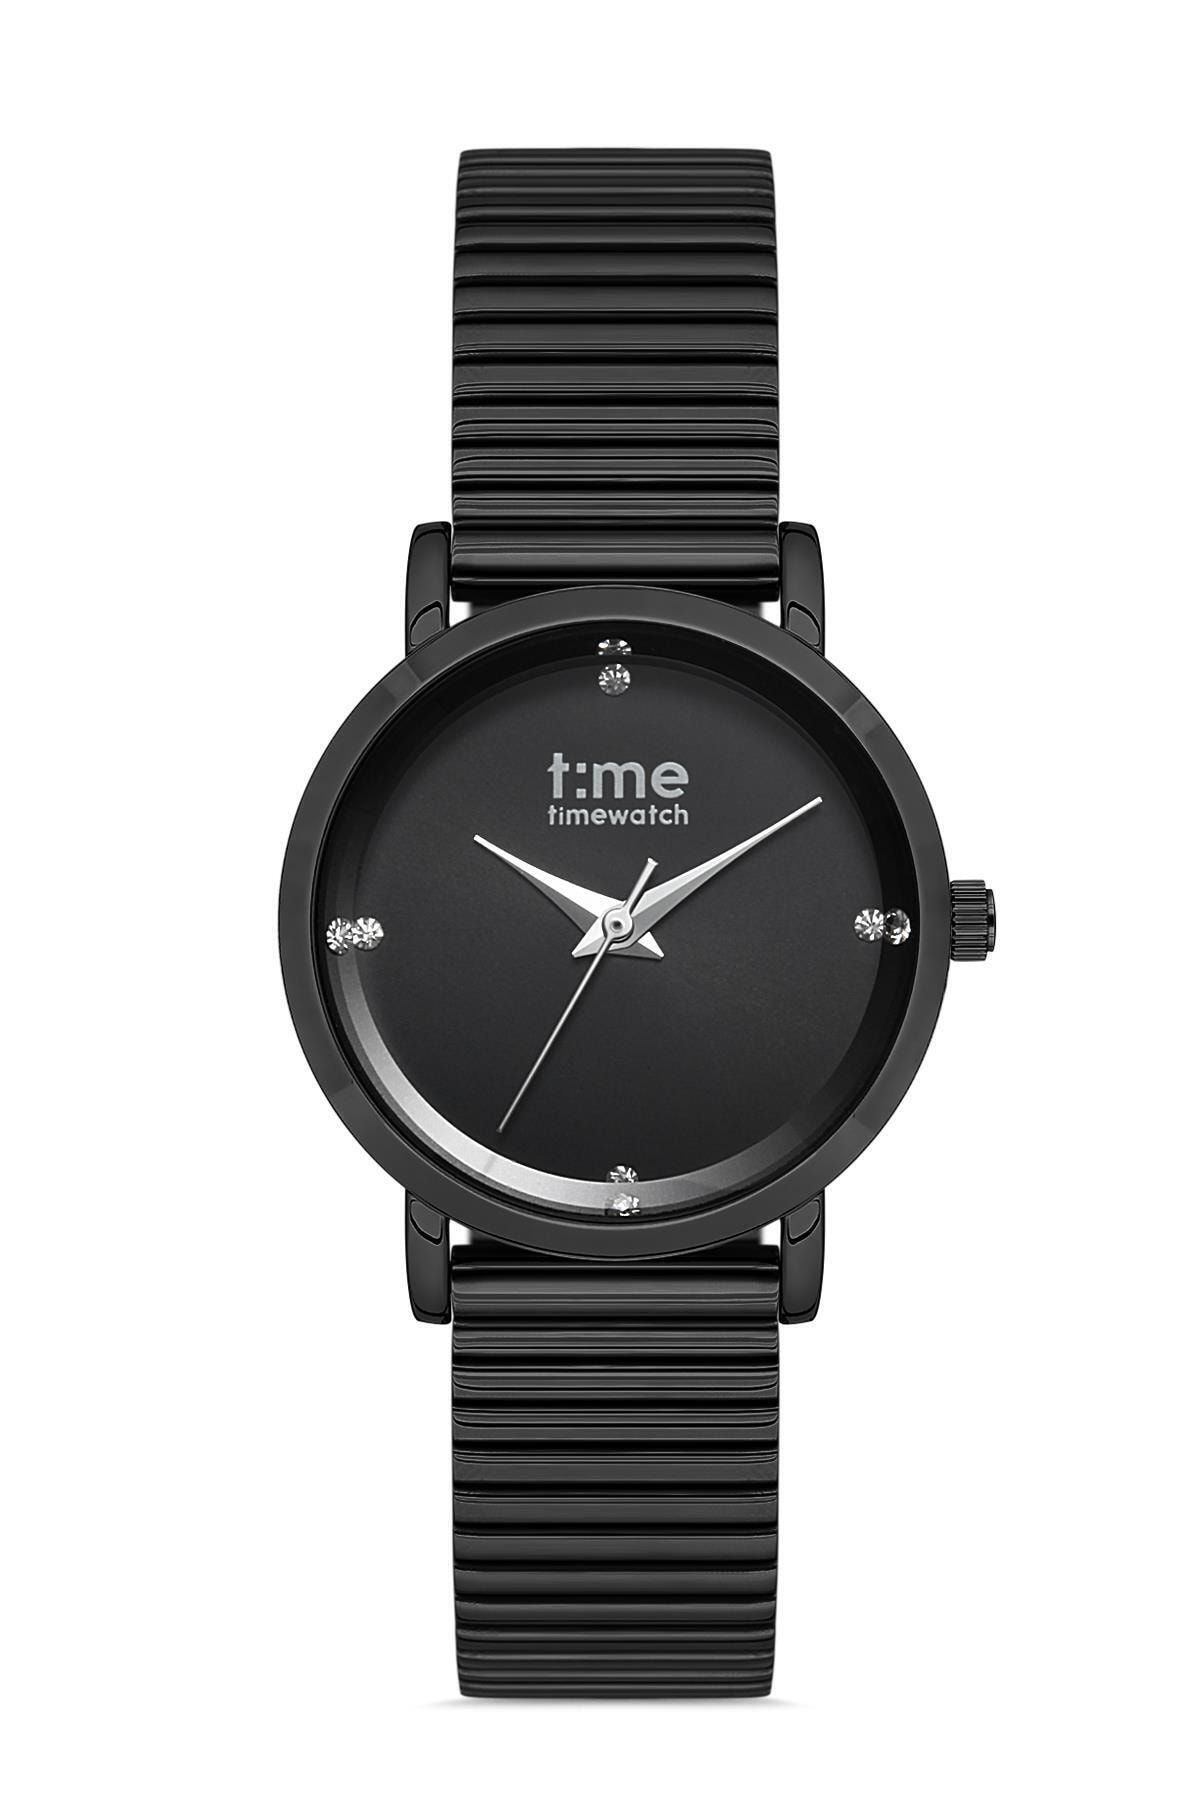 Timewatch Time Watch Tw.156.4bbb Kol Saati